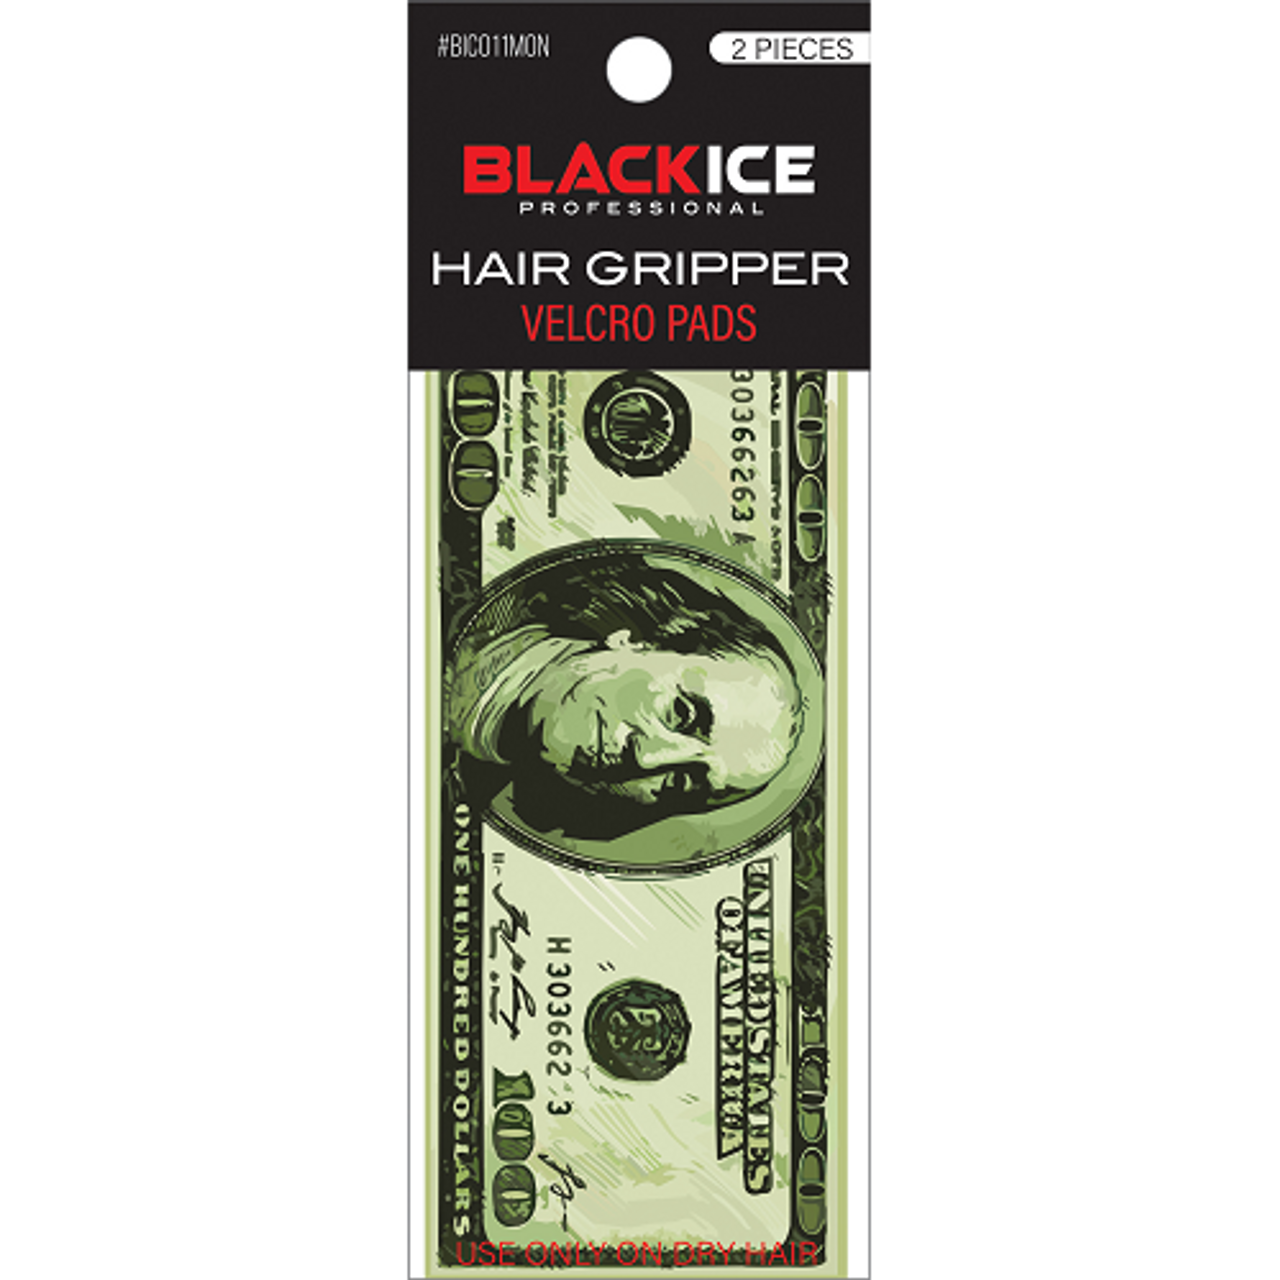 Black Ice Professional Hair Gripper Velcro Pads - Money - 2pcs.